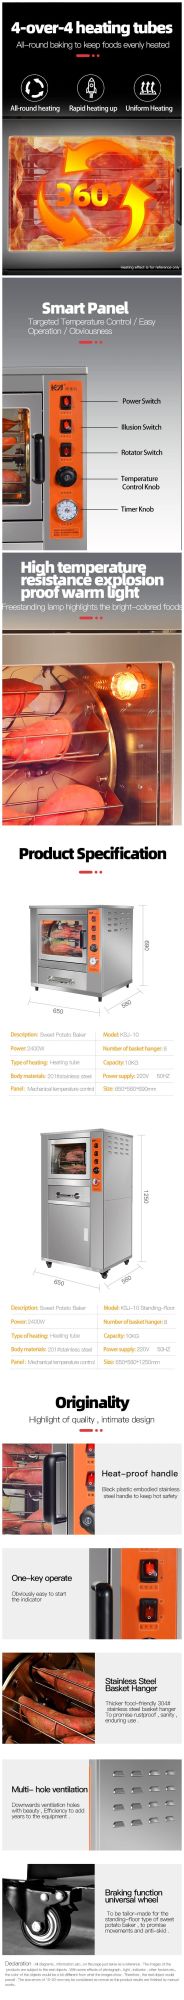 Ksj-10 China Price Stainless Steel Countertop Corn Grilled Roast Sweet Potato Oven Machine